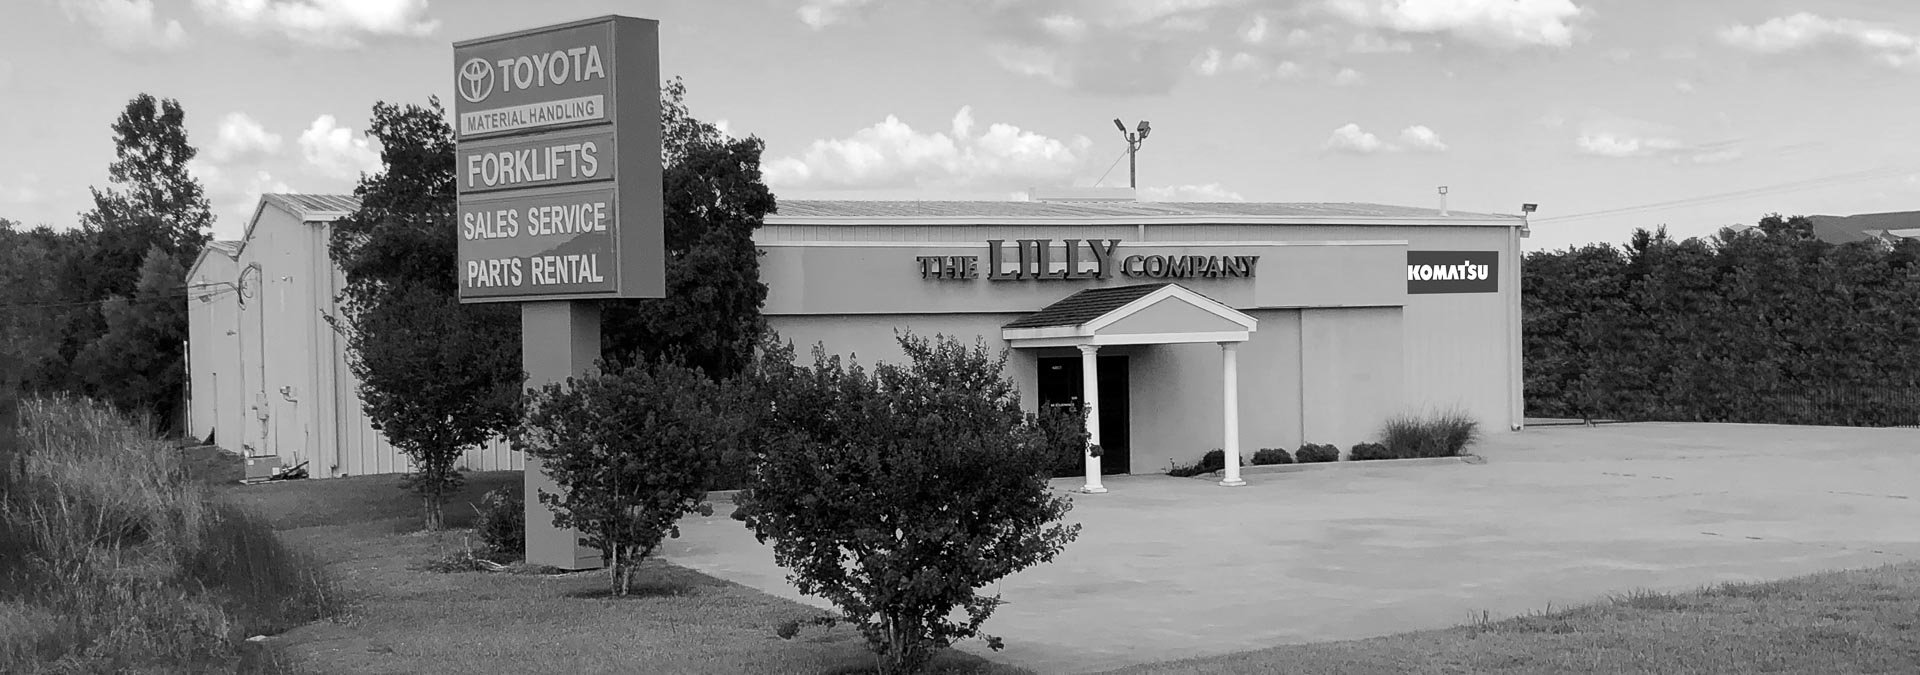 The Lilly Company, Montgomery Alabama